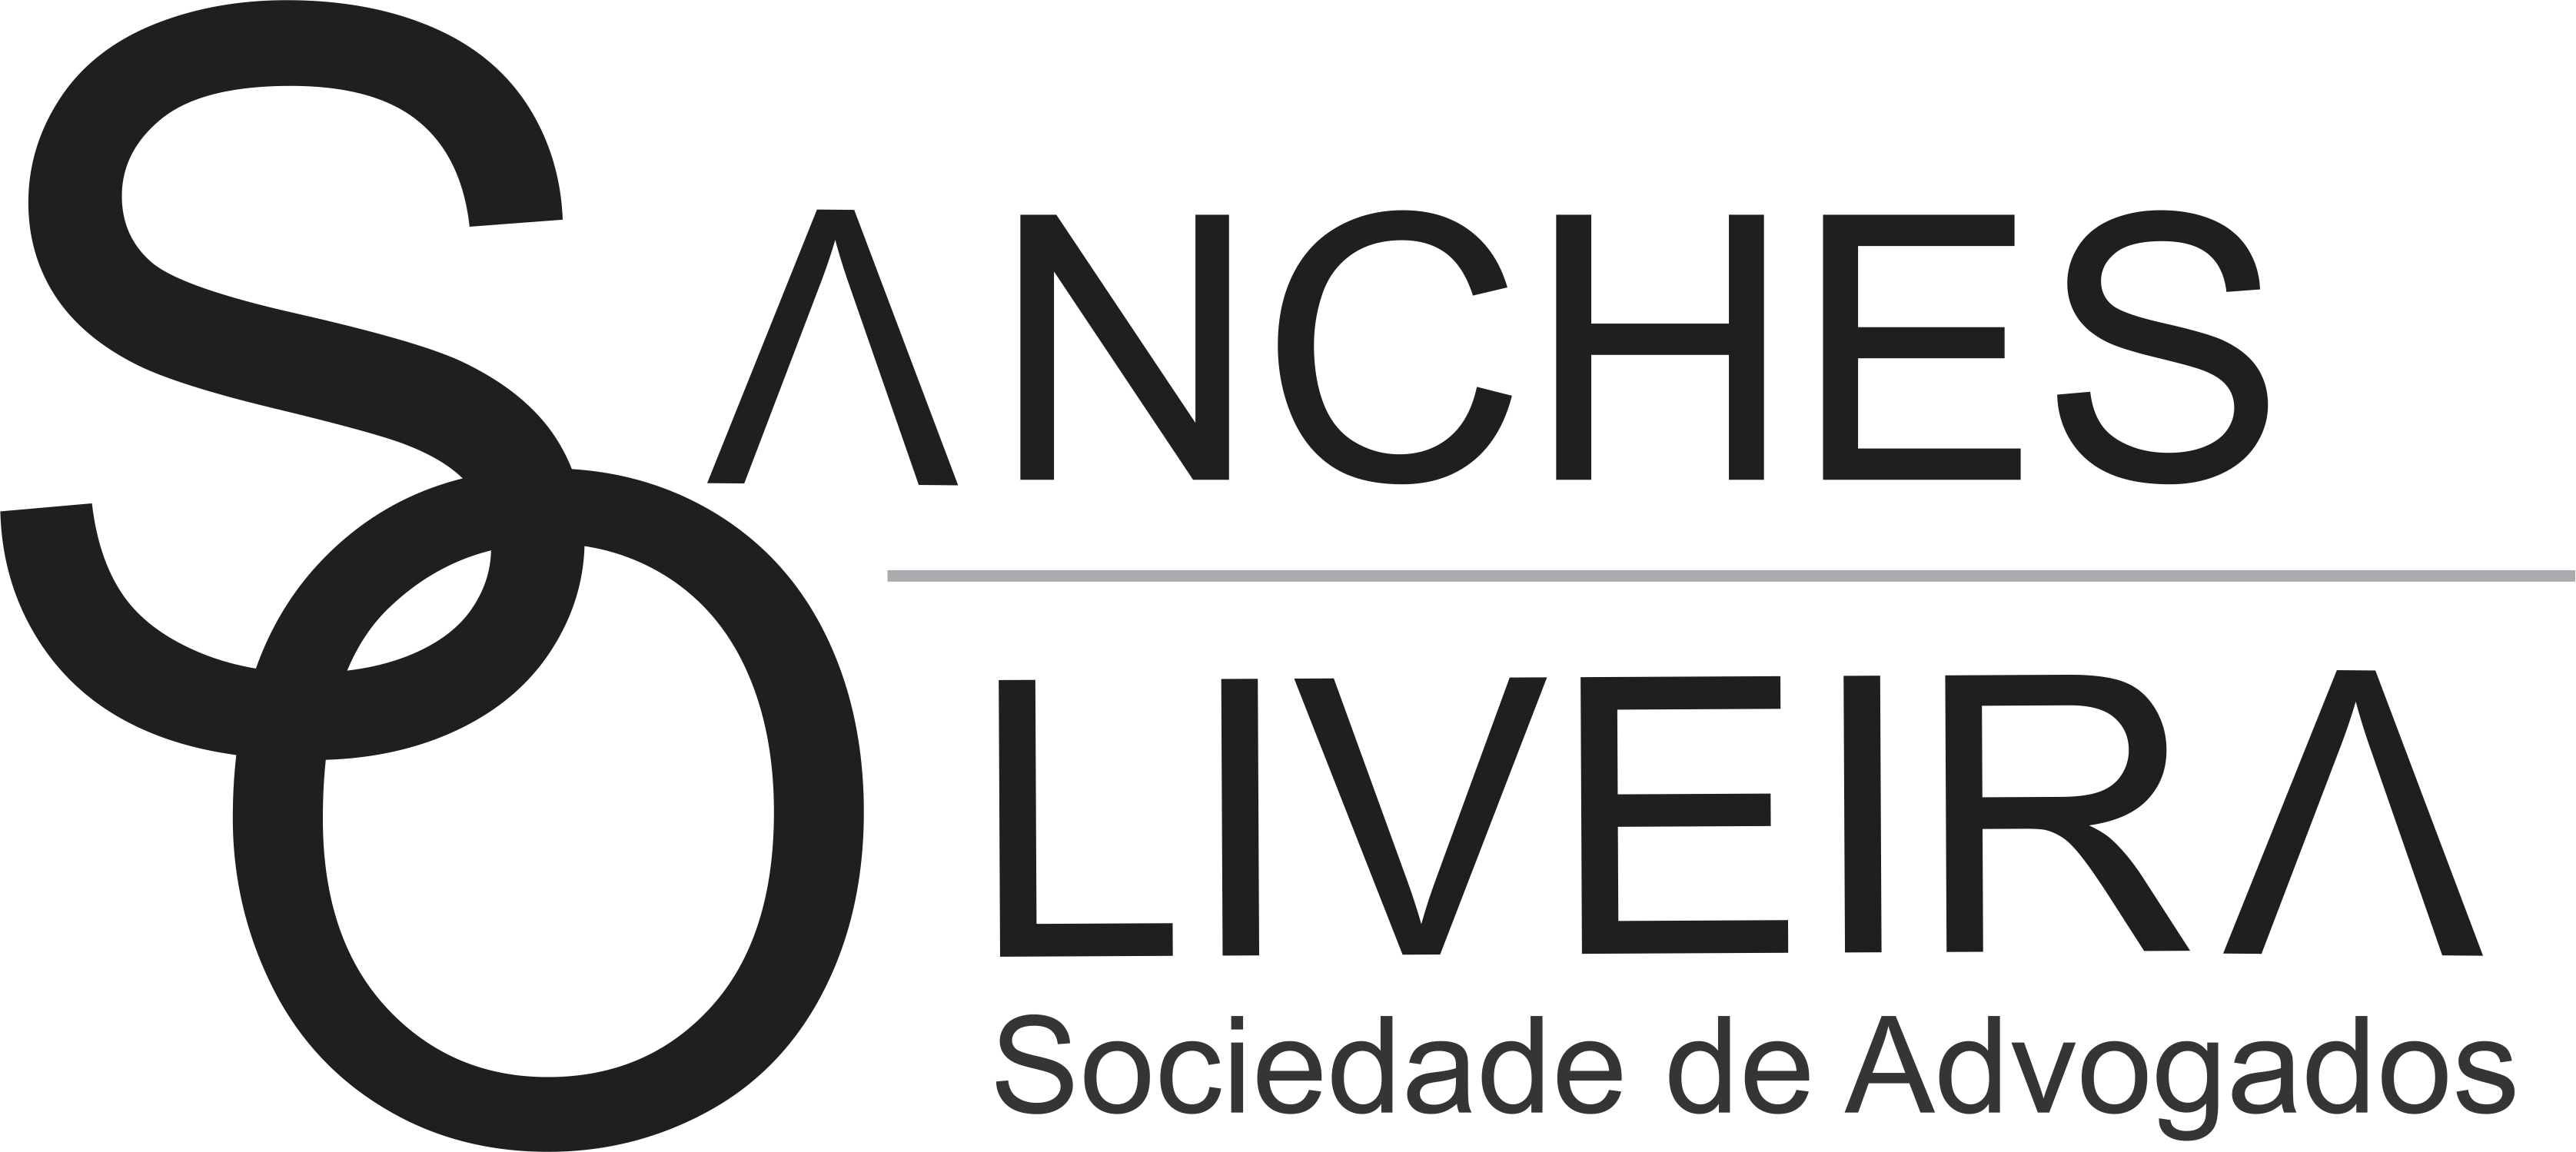 Sanches Oliveira